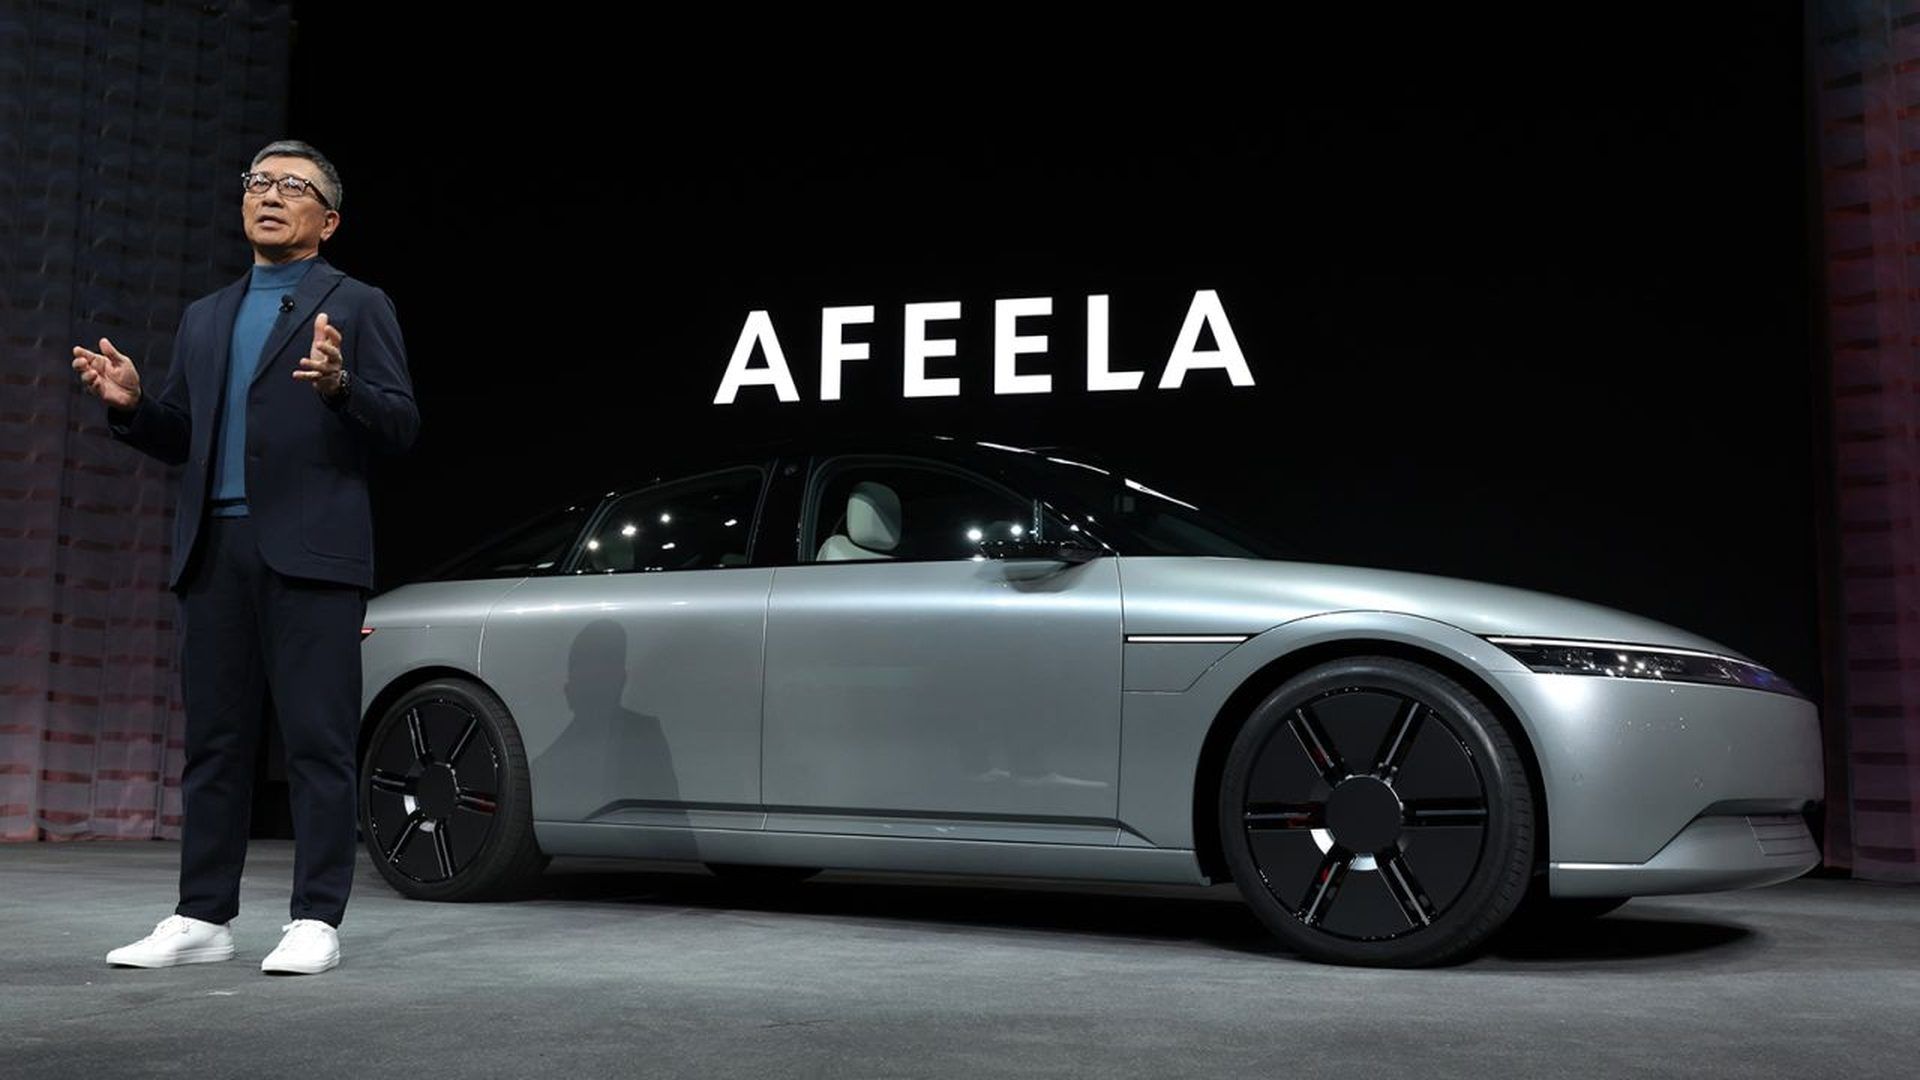 Presented by Honda and Sony: Afeela EV